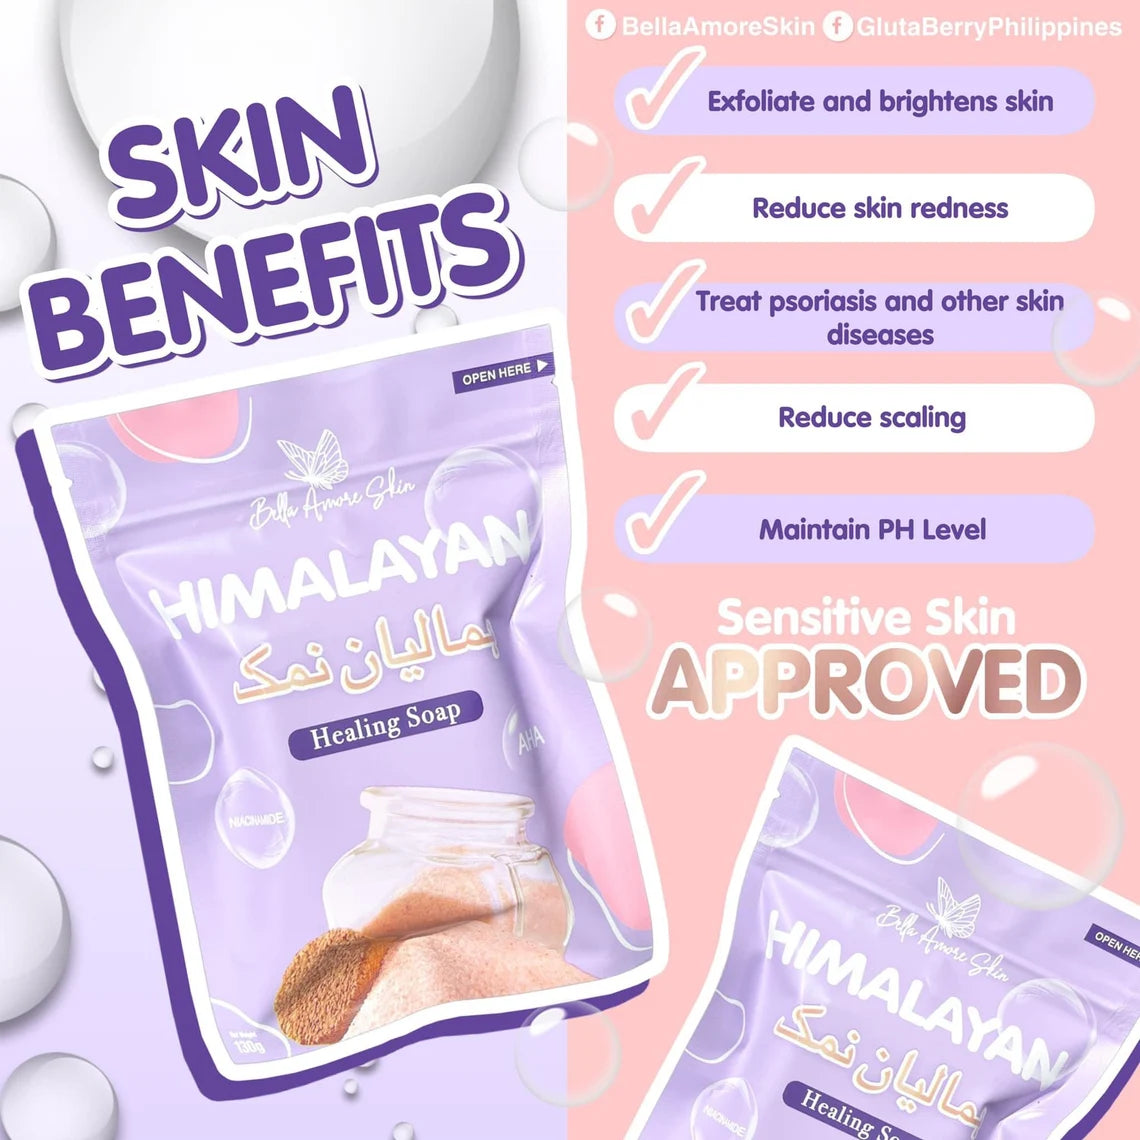 Bella Amore Skin Himalayan Healing Soap - AU NZ benefits